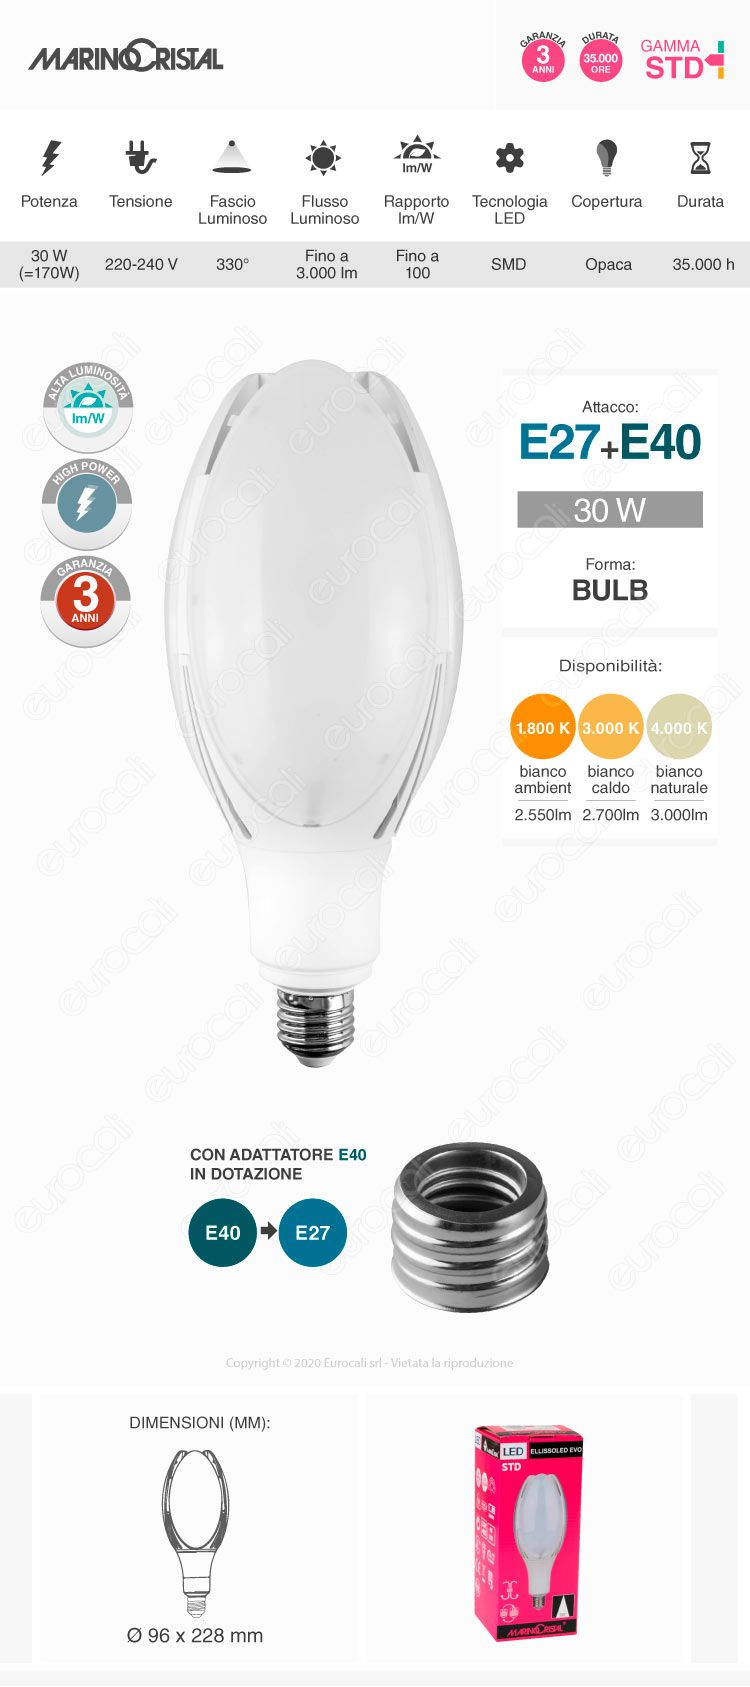 Marino Cristal Serie STD Lampadina LED Bulb Hi-Power E27 30W - mod. 21501 / 21502